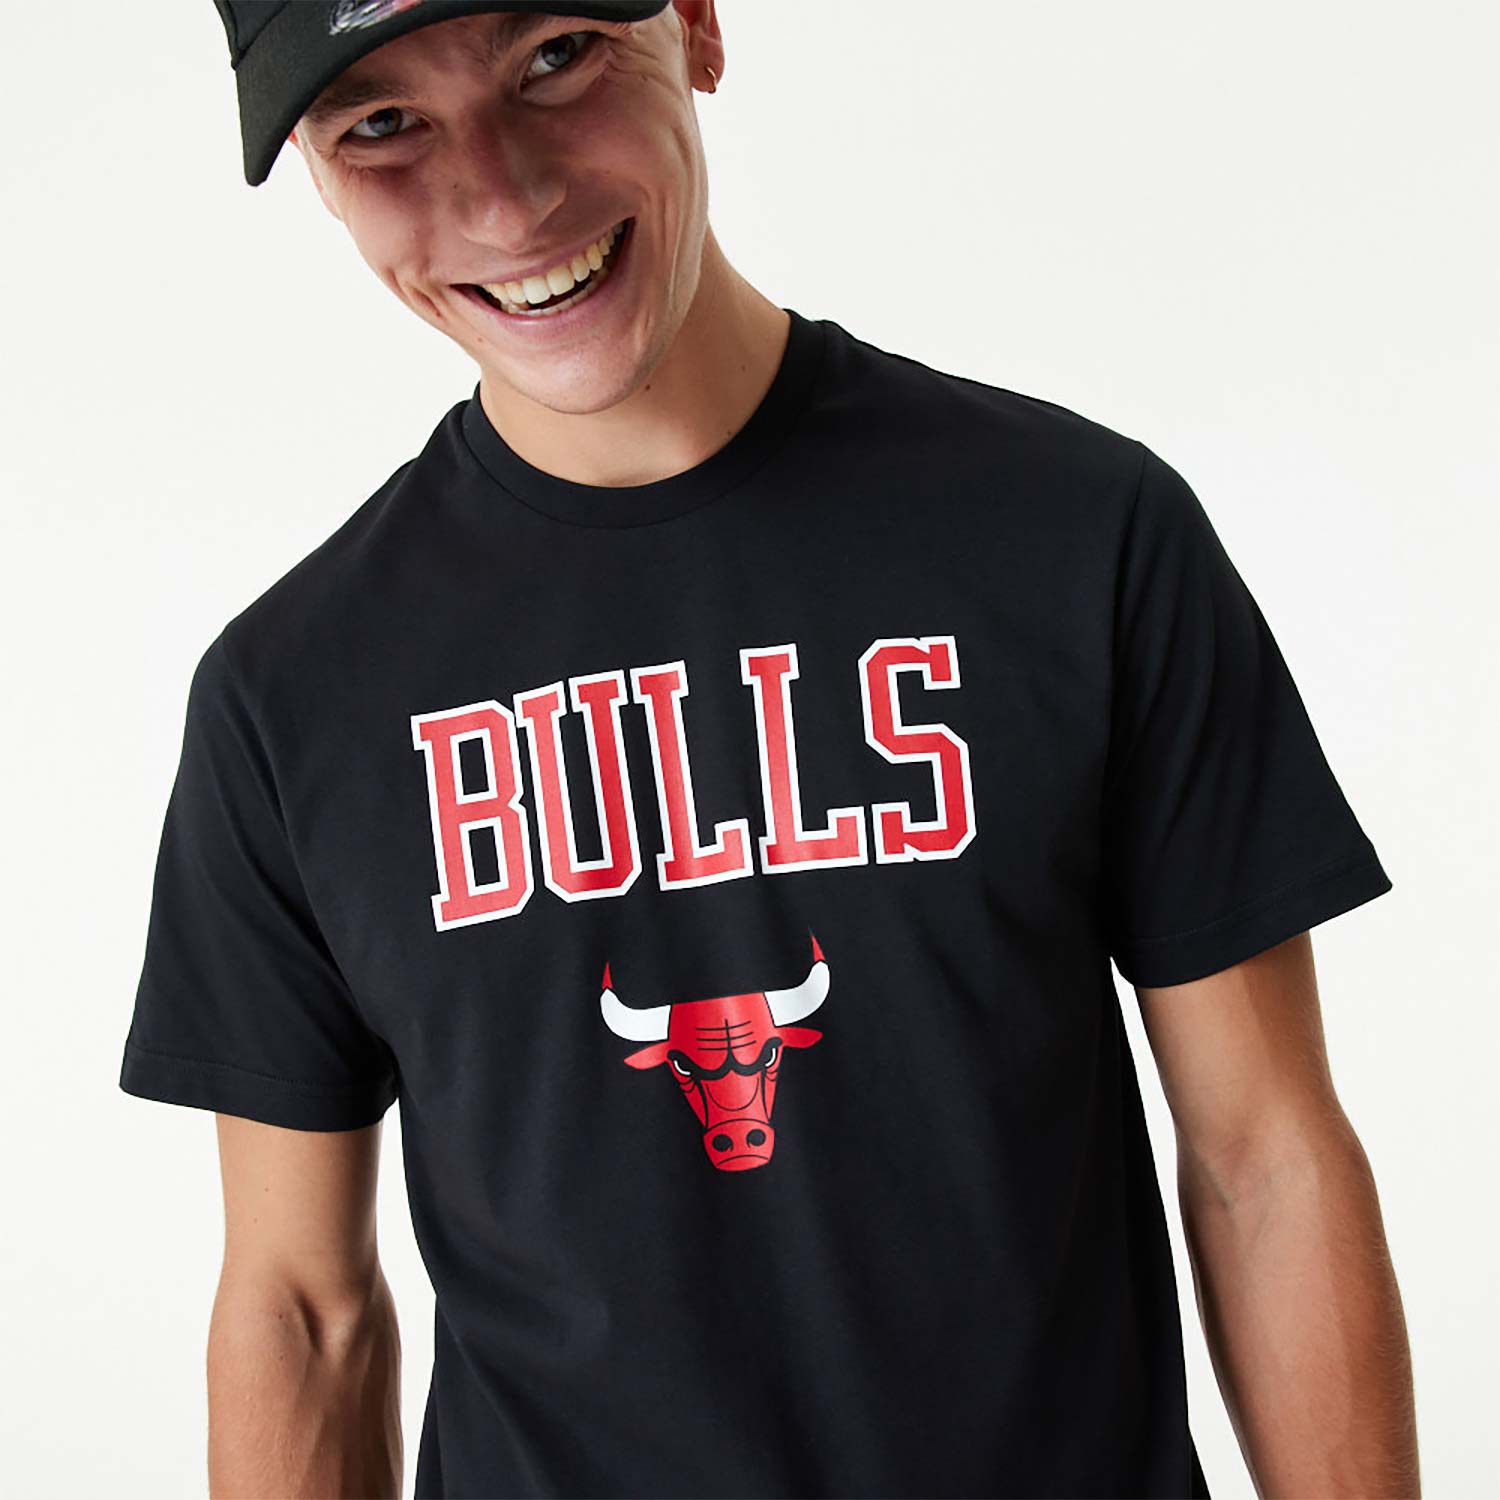 T-shirts New Era Chicago Bulls NBA Team Logo Black T-Shirt Black